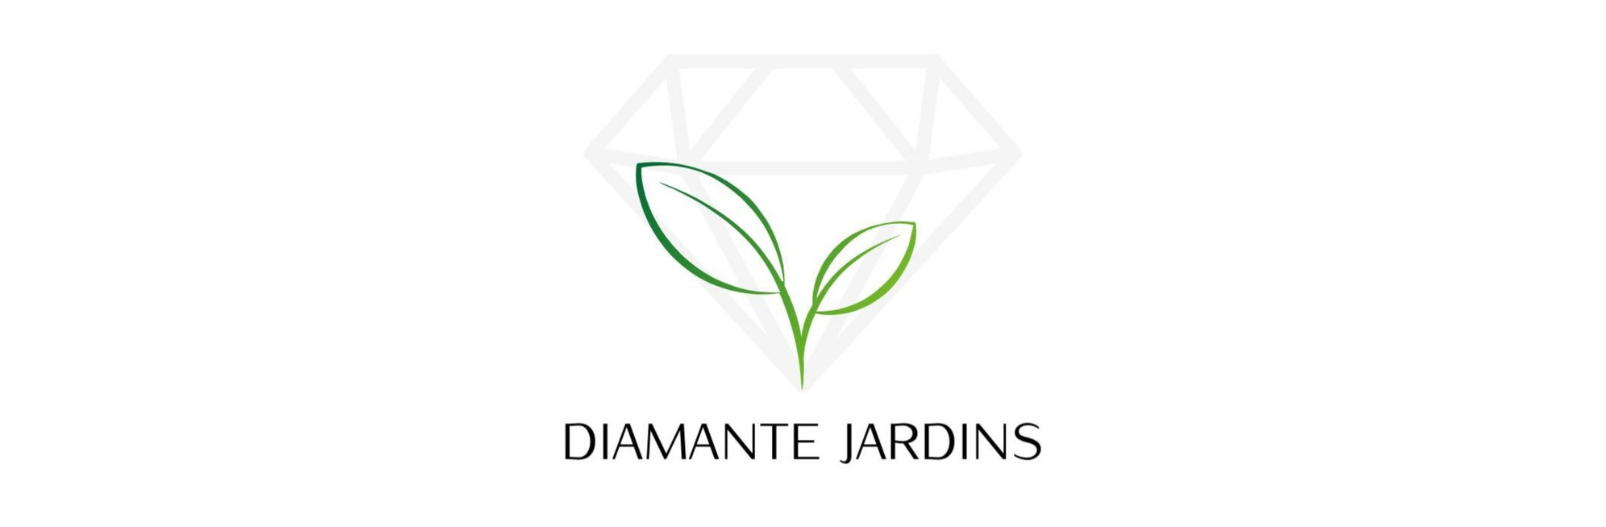 DIAMANTES JARDINS